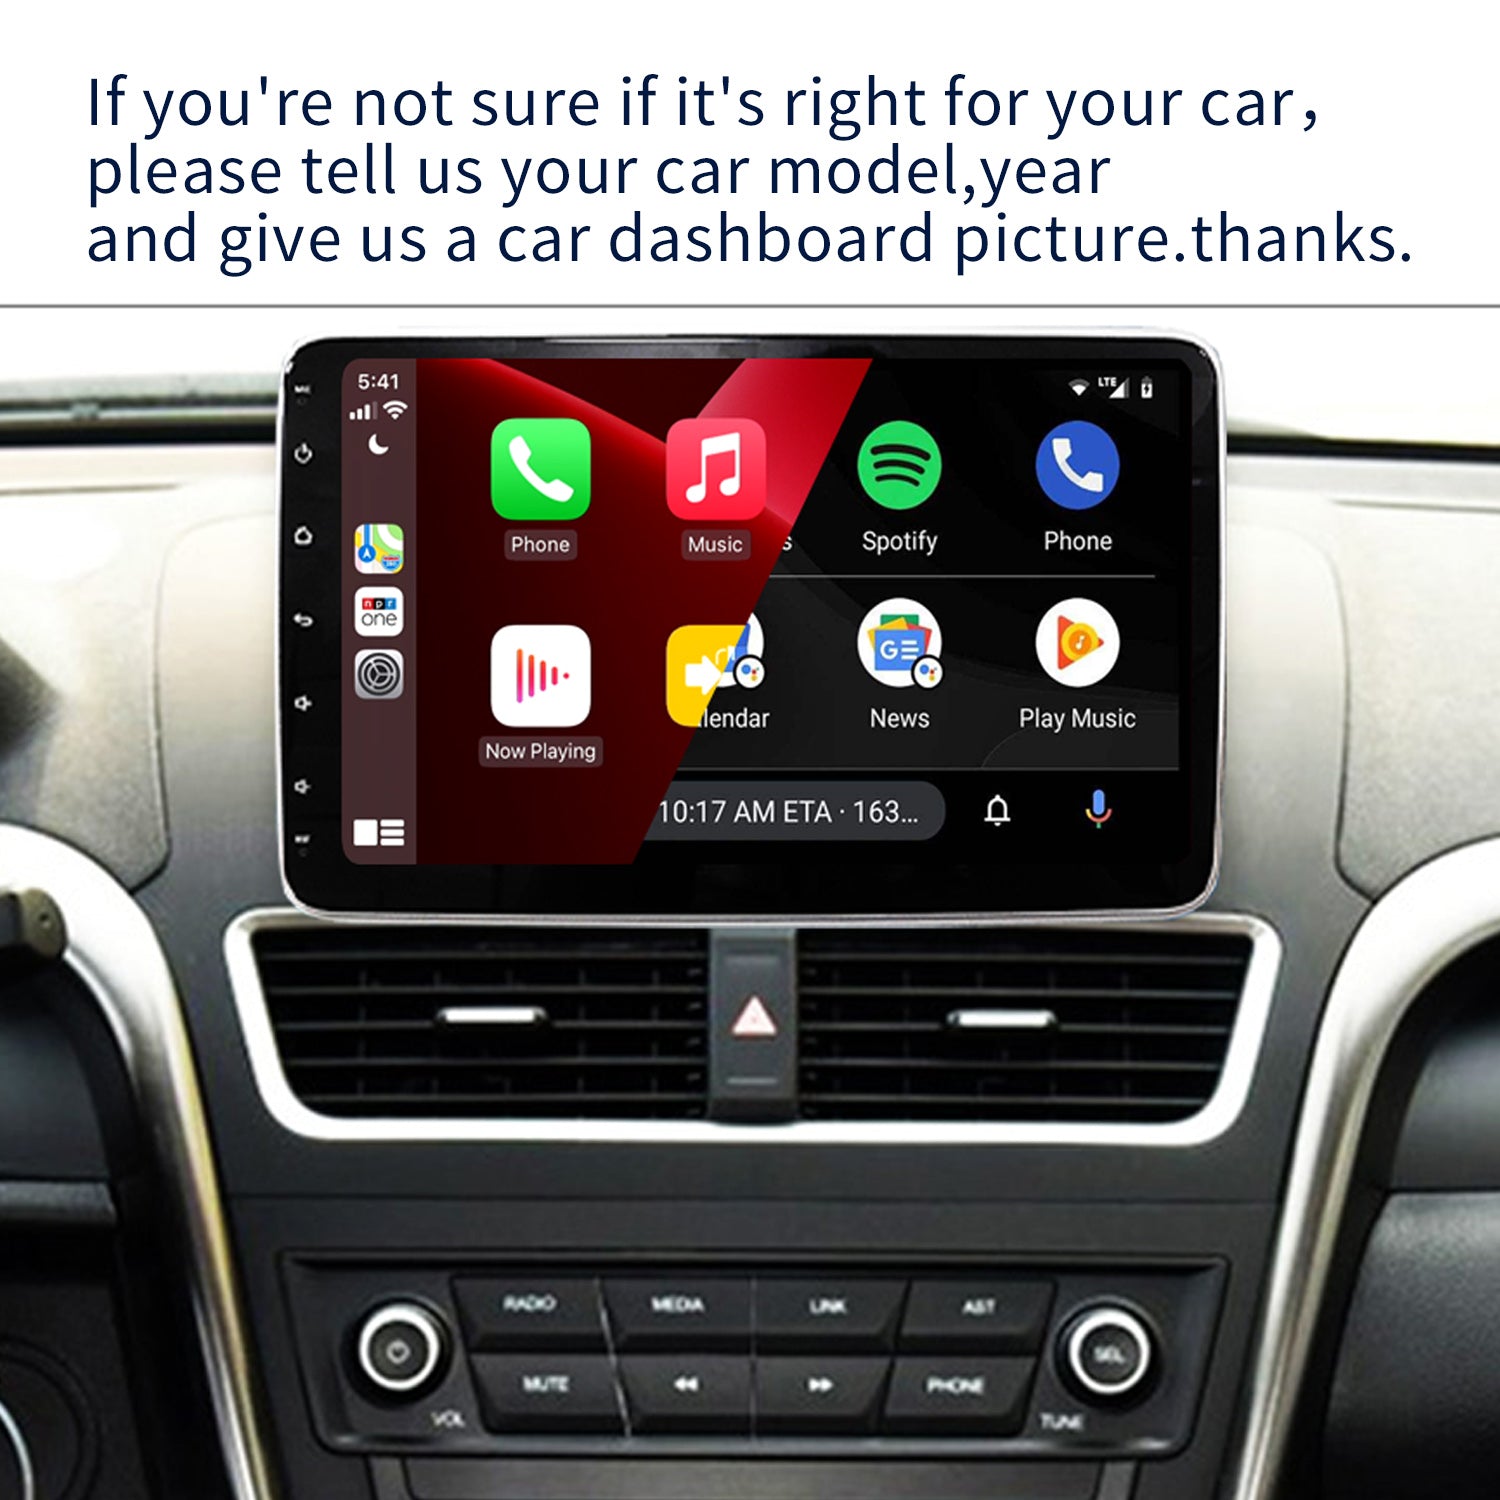 Universal 10.2 2 Din Car Stereo Radio Carplay Android Auto